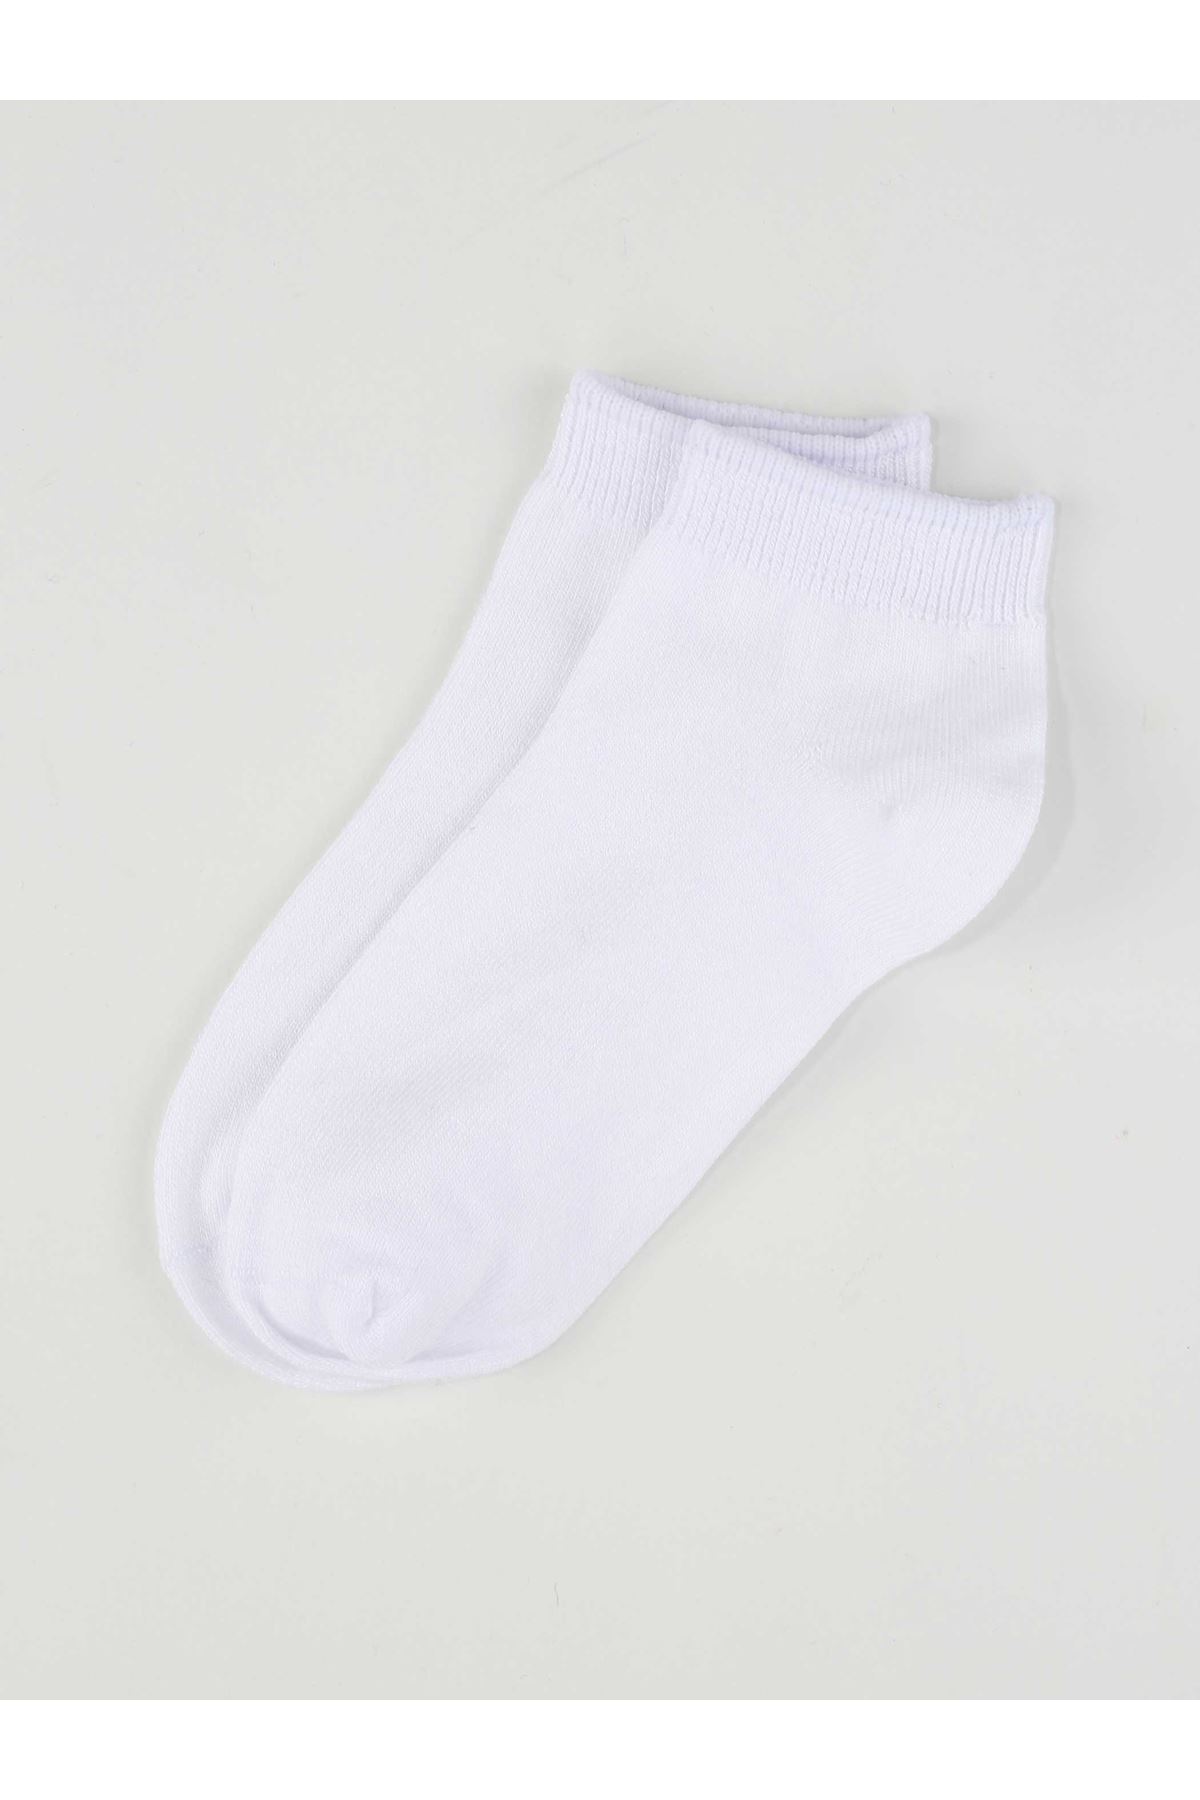 White Bamboo Boy's Booties Socks